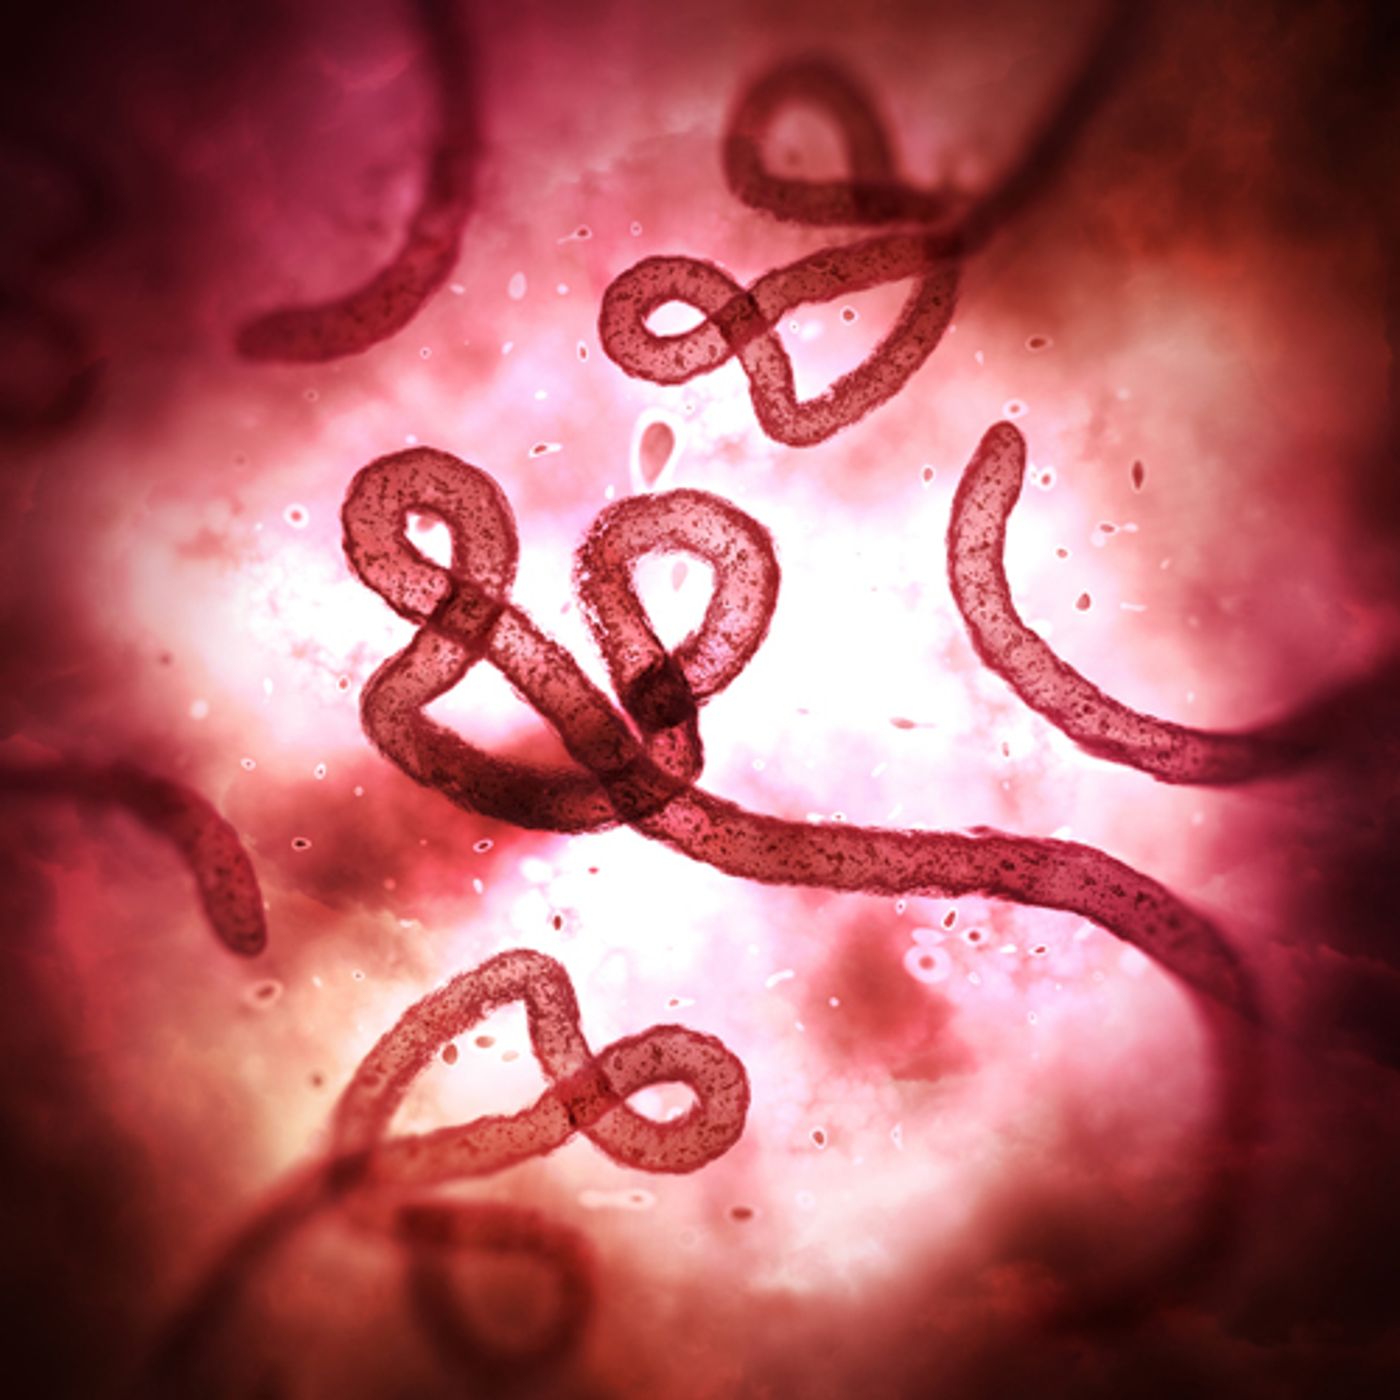 An illustration of Ebola virus